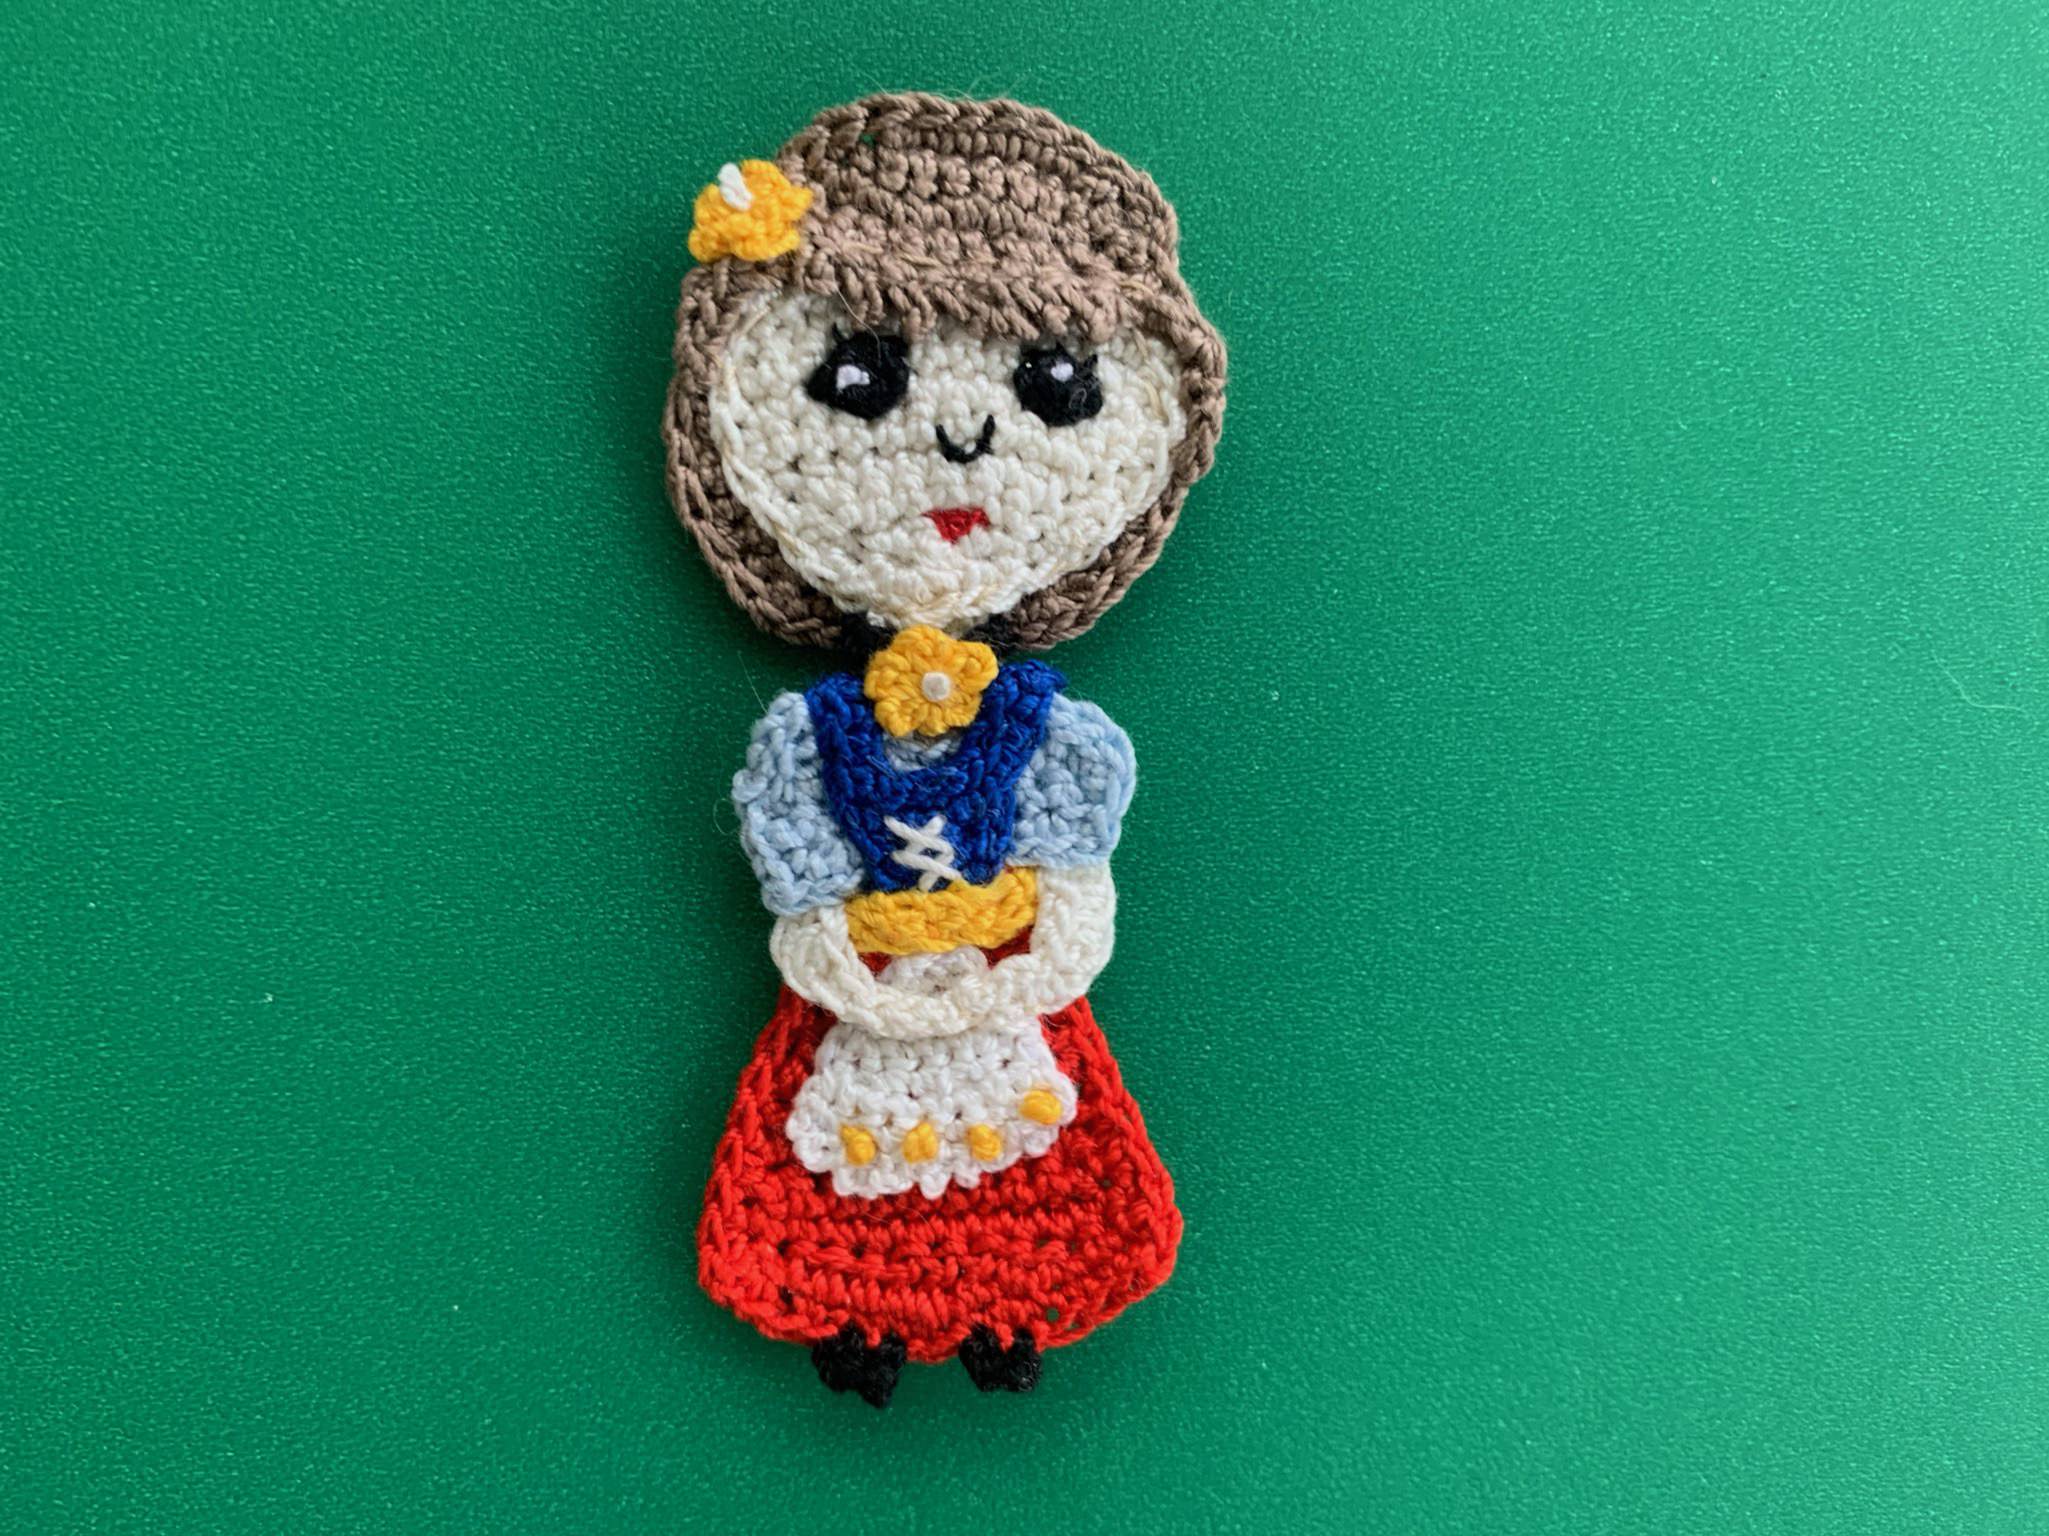 Finished Crochet Bavarian girl 4 ply landscape